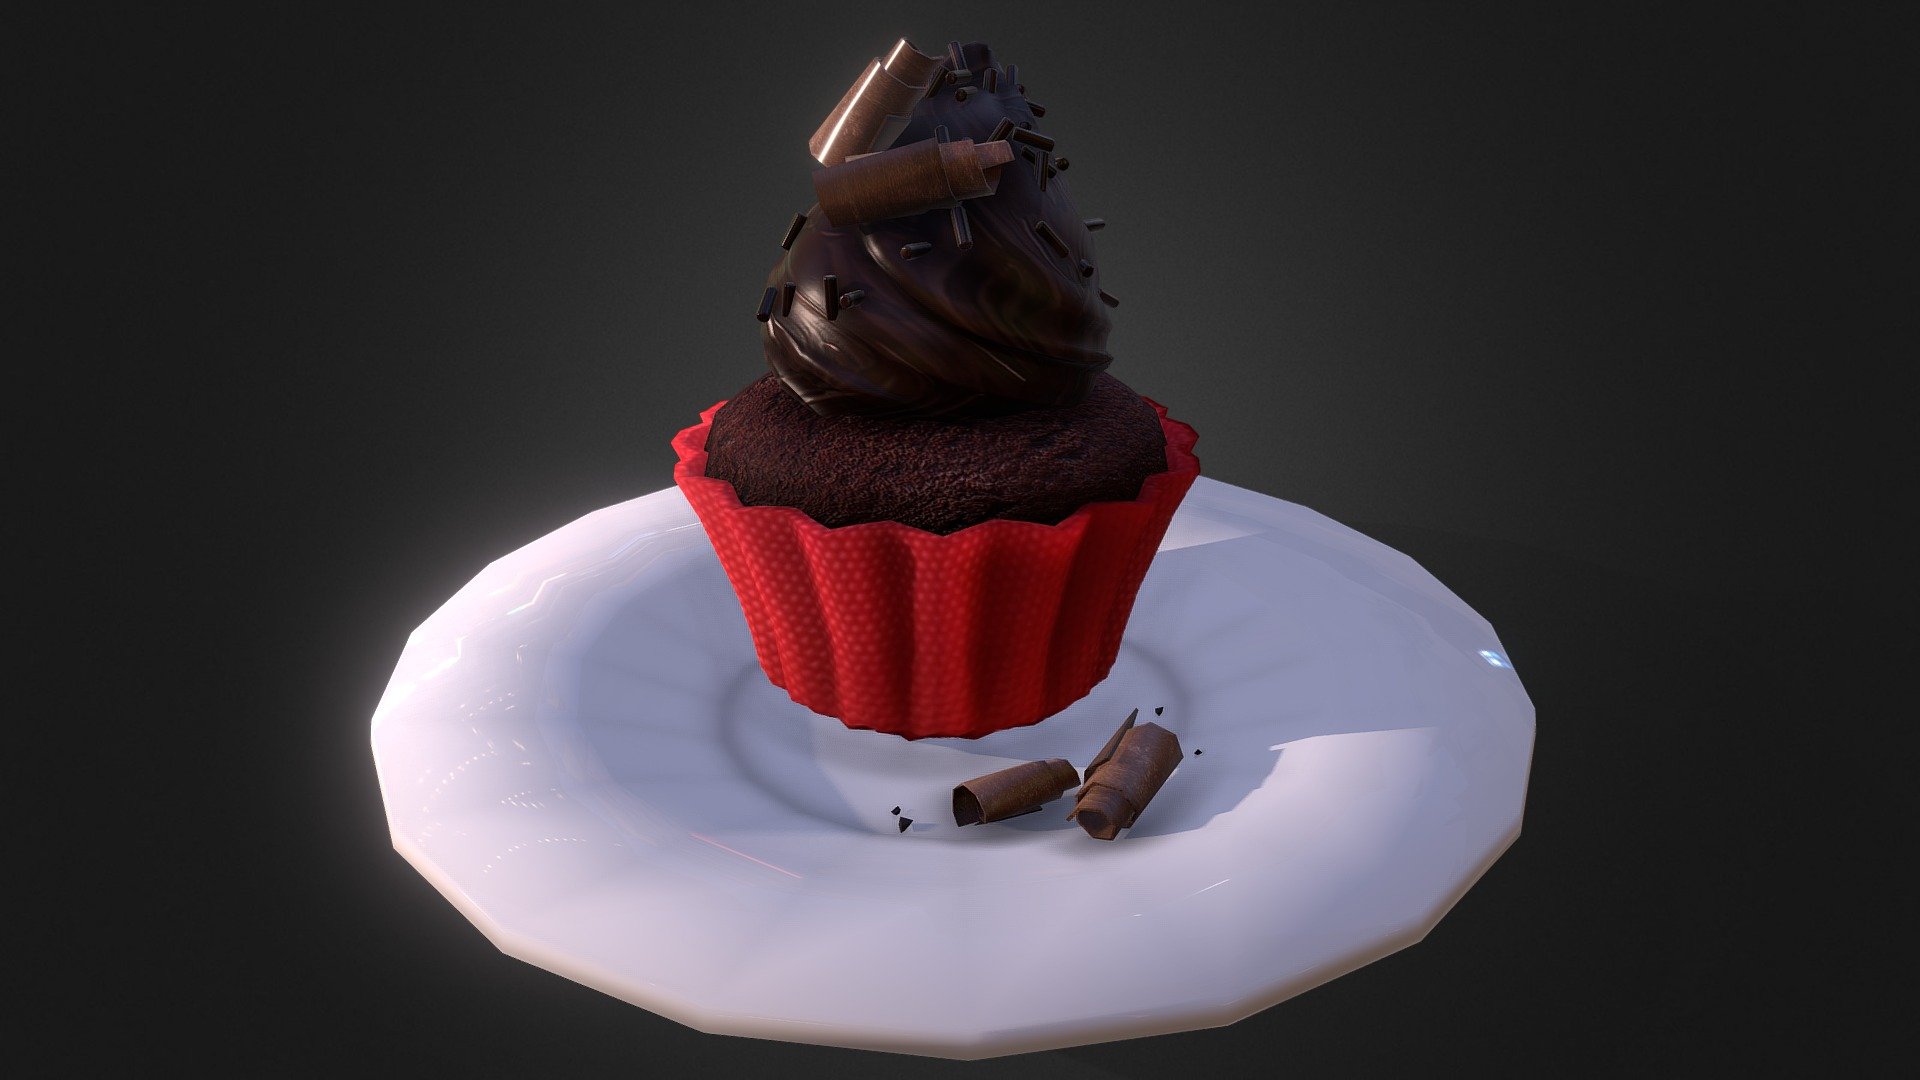 Cupcake Chocolate
Maya + Photoshop
Complete Process: https://youtu.be/X0Z3_8mBRT0 - Cupcake Chocolate - 3D model by Carlos Rubio (@lurubio) 3d model